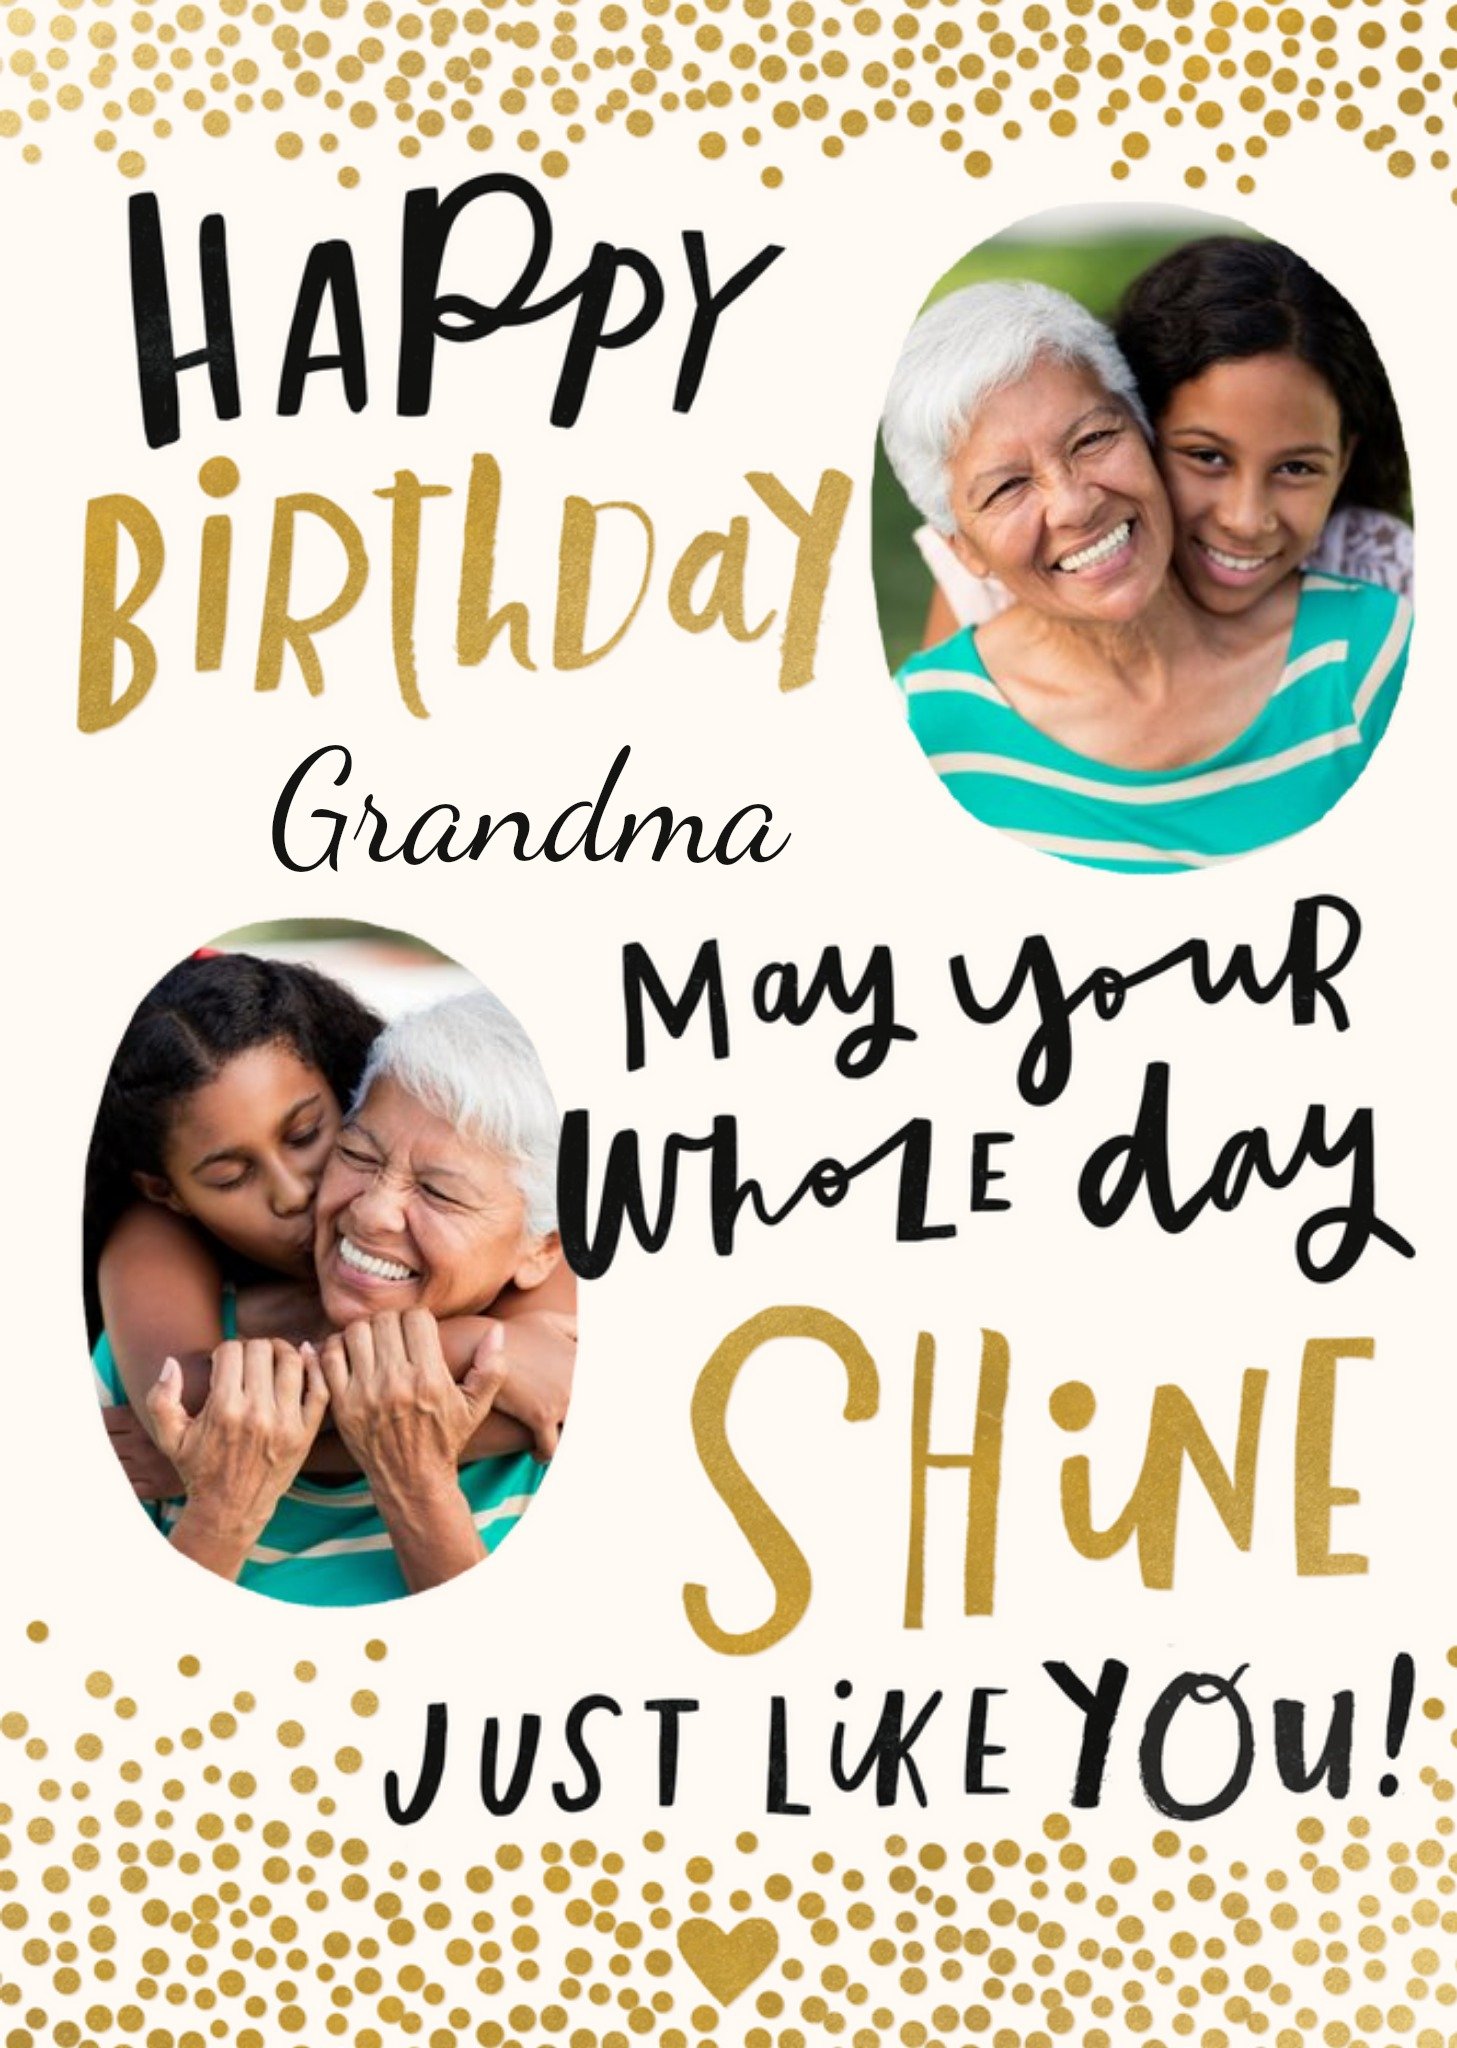 Moonpig Typographic Happy Birthday Grandma May Your Whole Day Shine Just Like You Photo Upload Card 